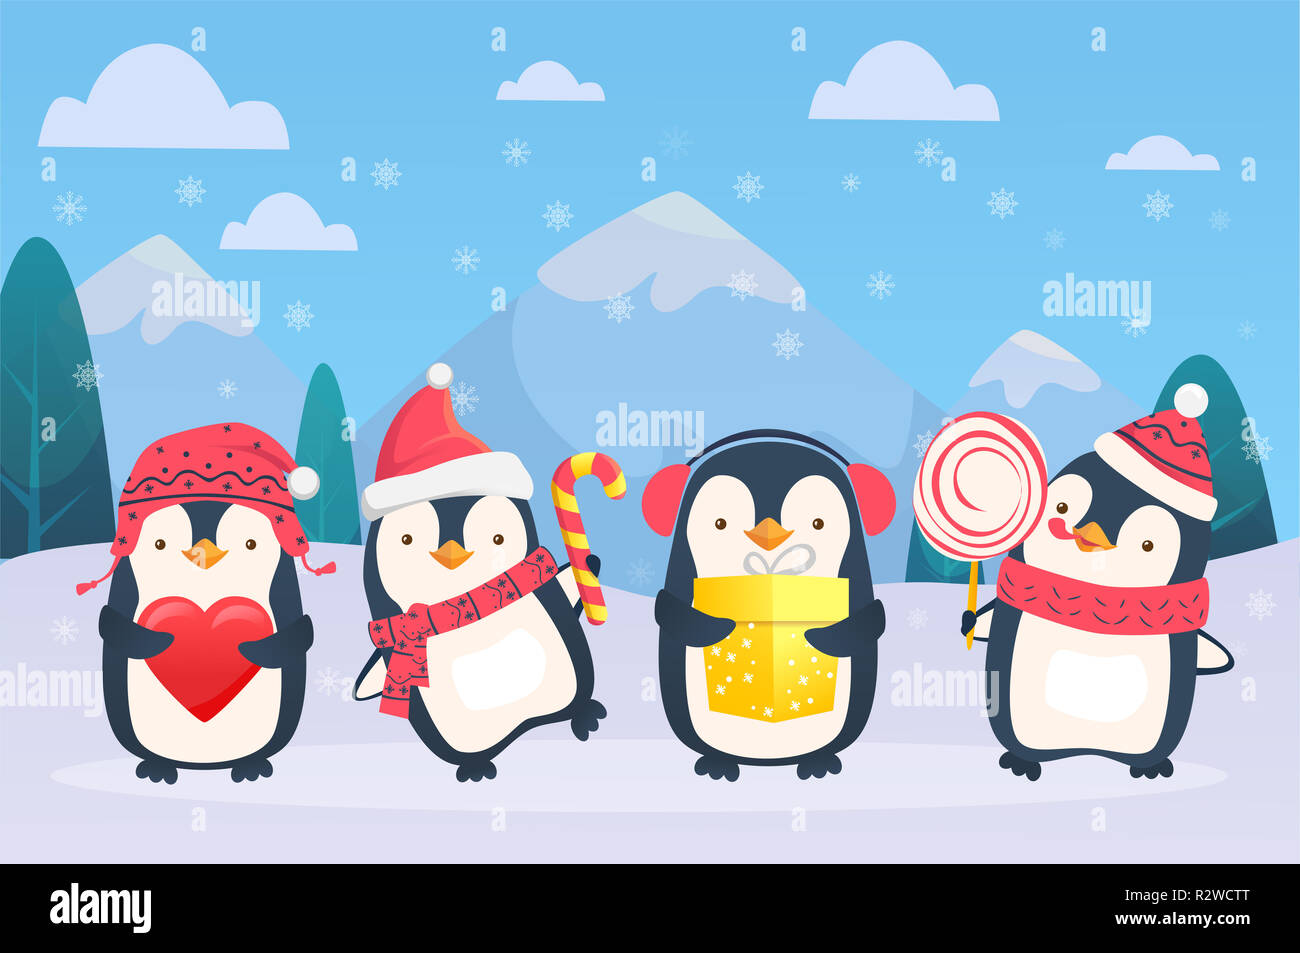 Funny Penguin Clip Art  Penguins funny, Christmas wood crafts, Penguins